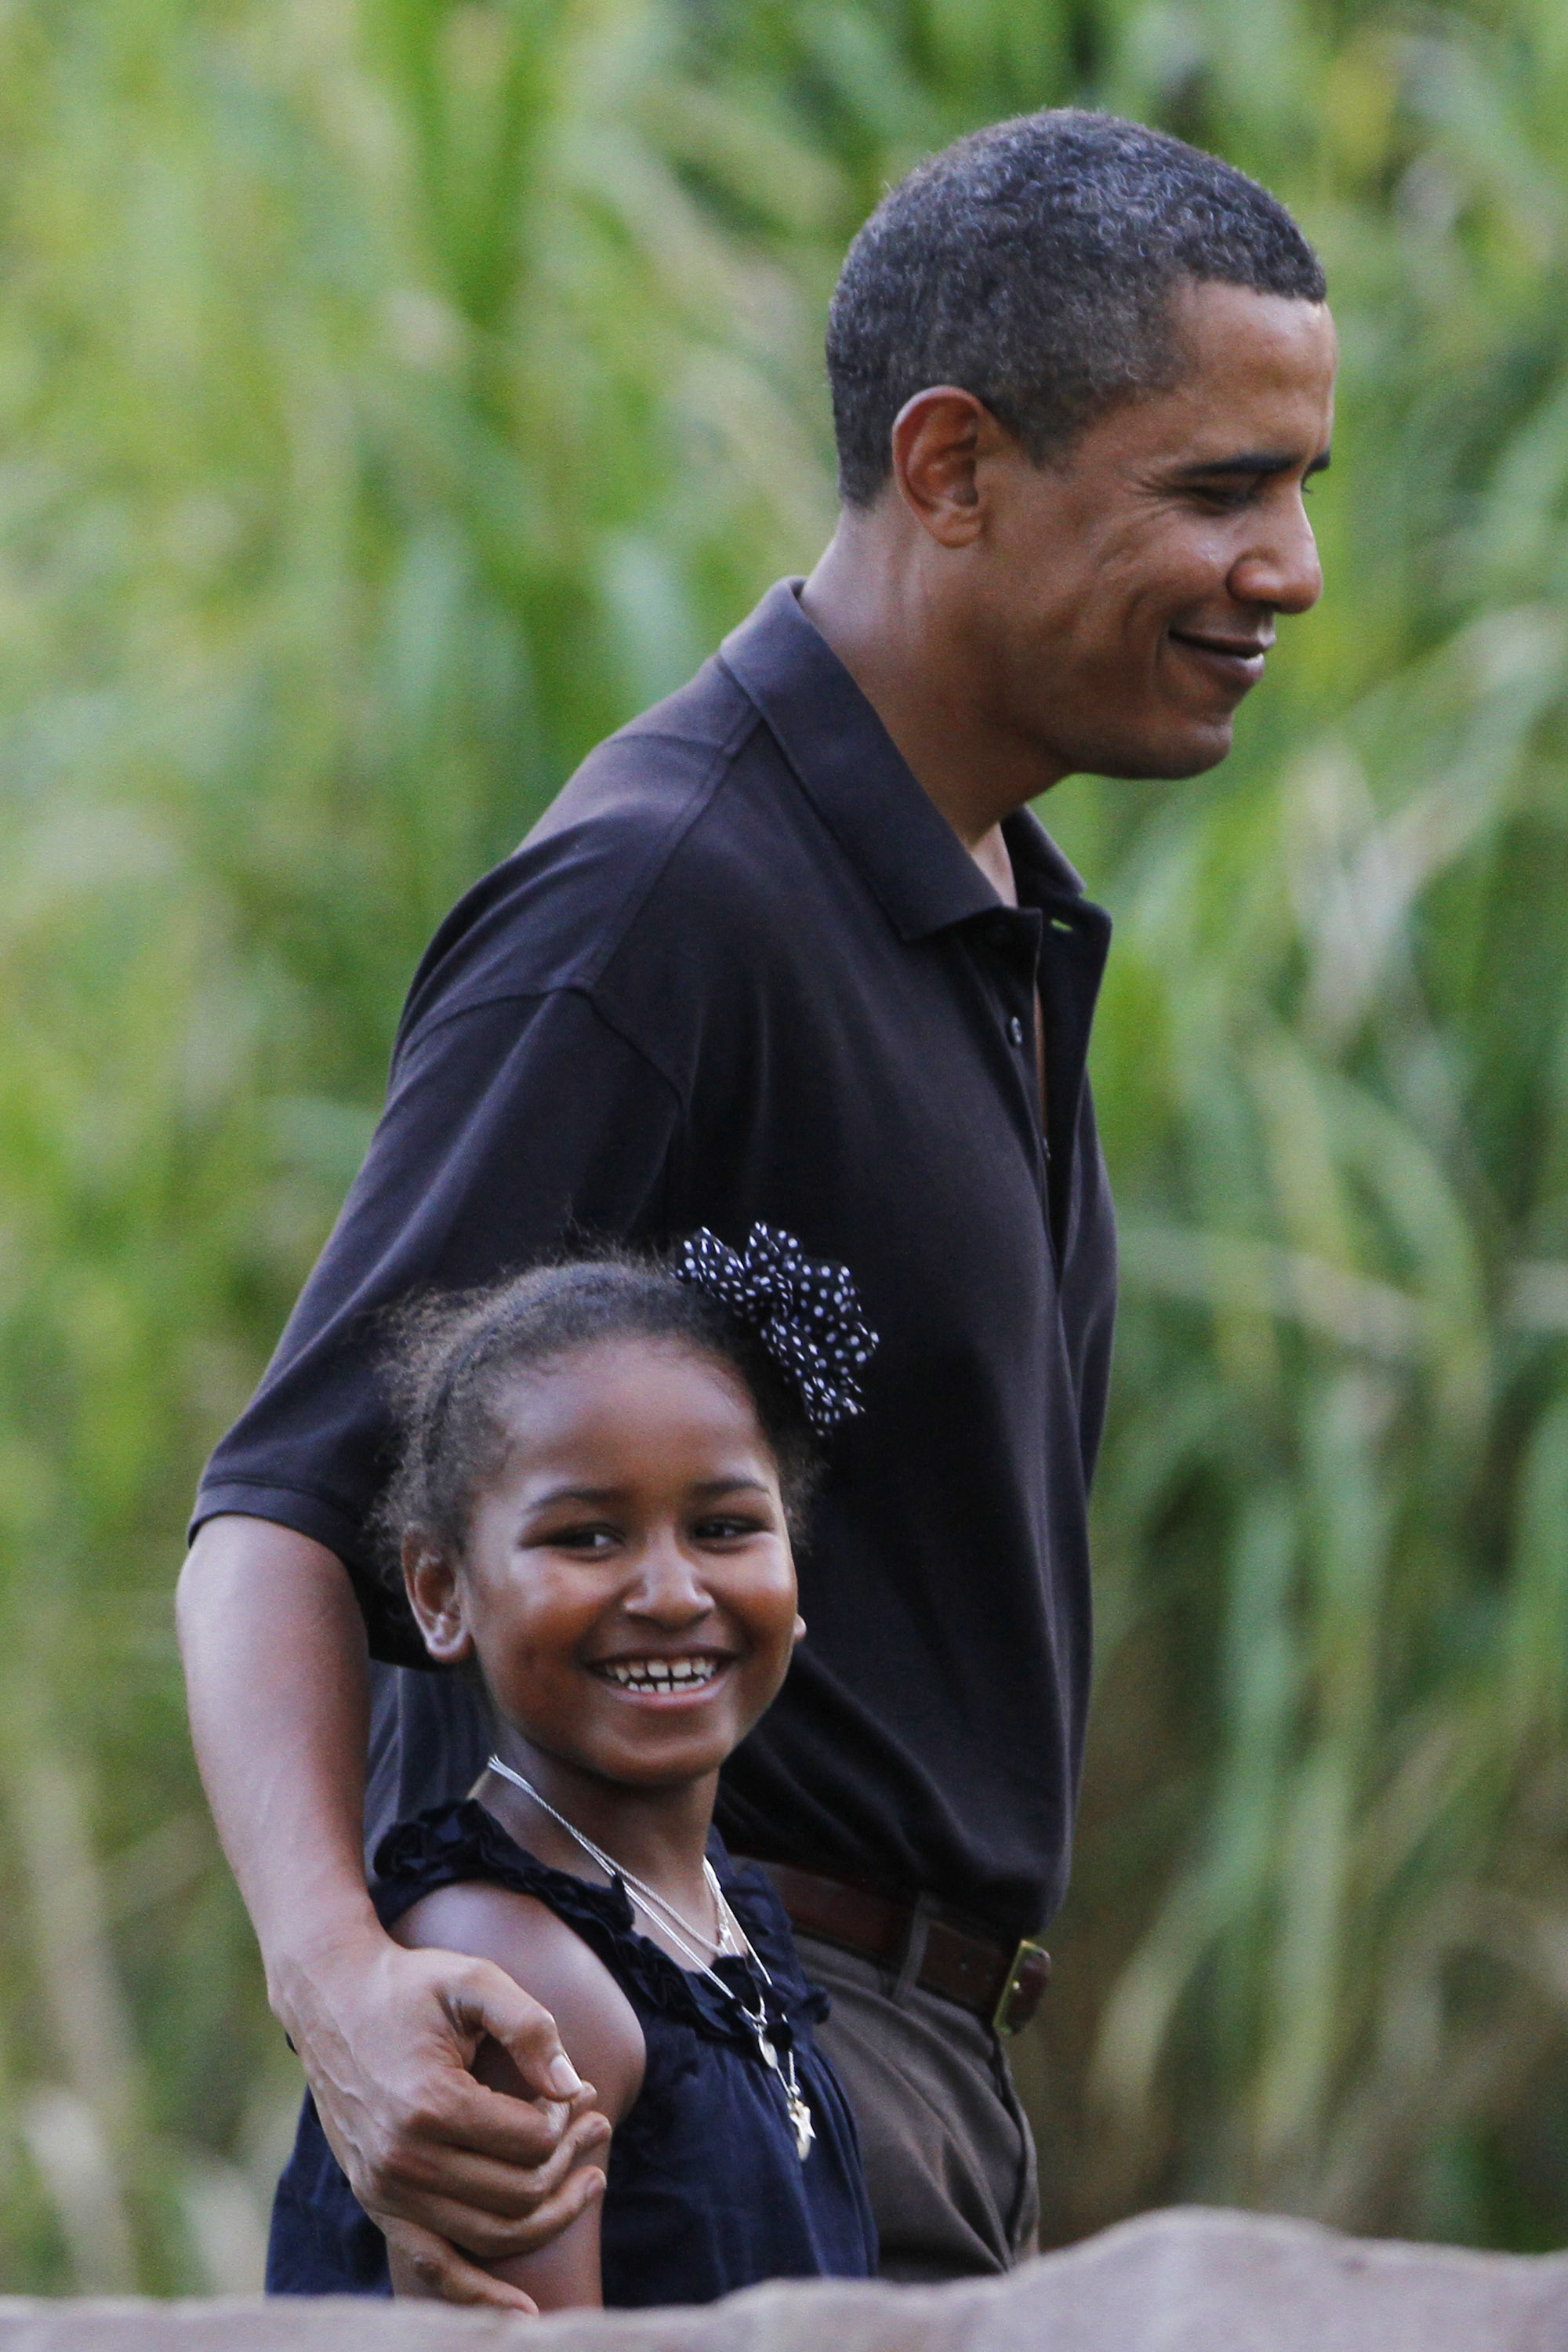 Barack and Sasha Obama walk through a zoo in Honolulu, Hawaii on January 3, 2009. | Source: Getty Images